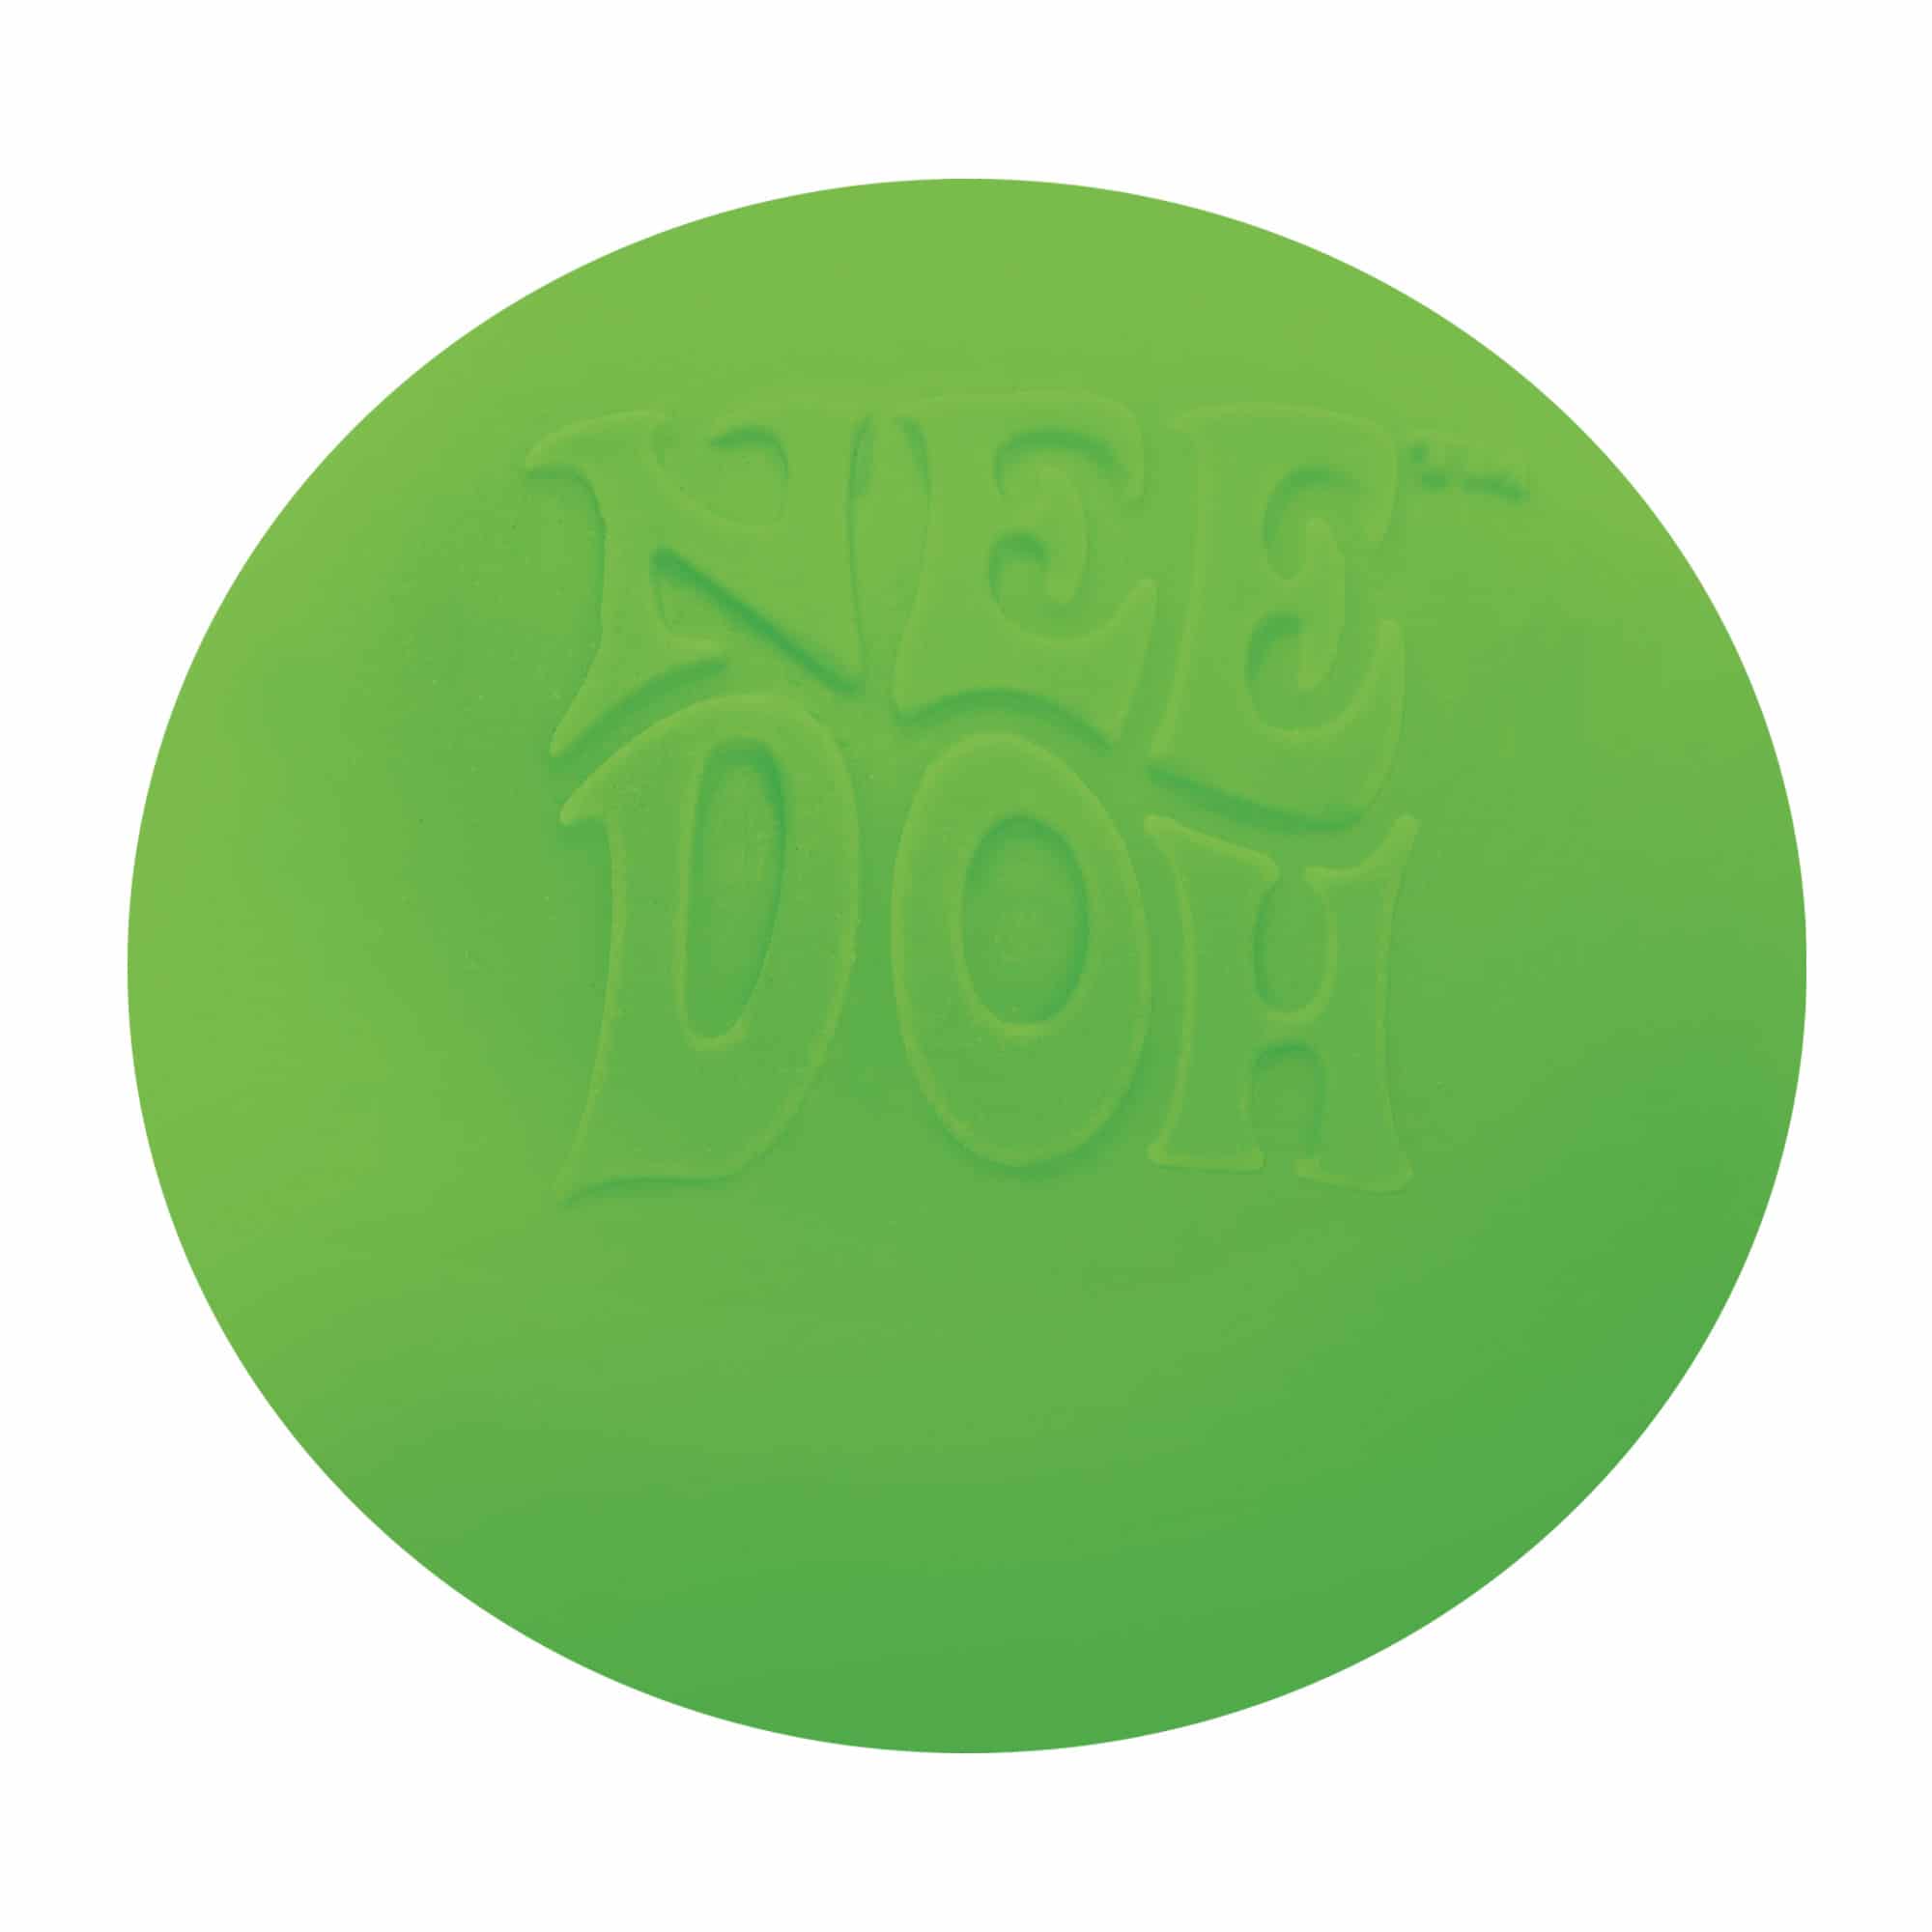 The green Nee Doh ball.